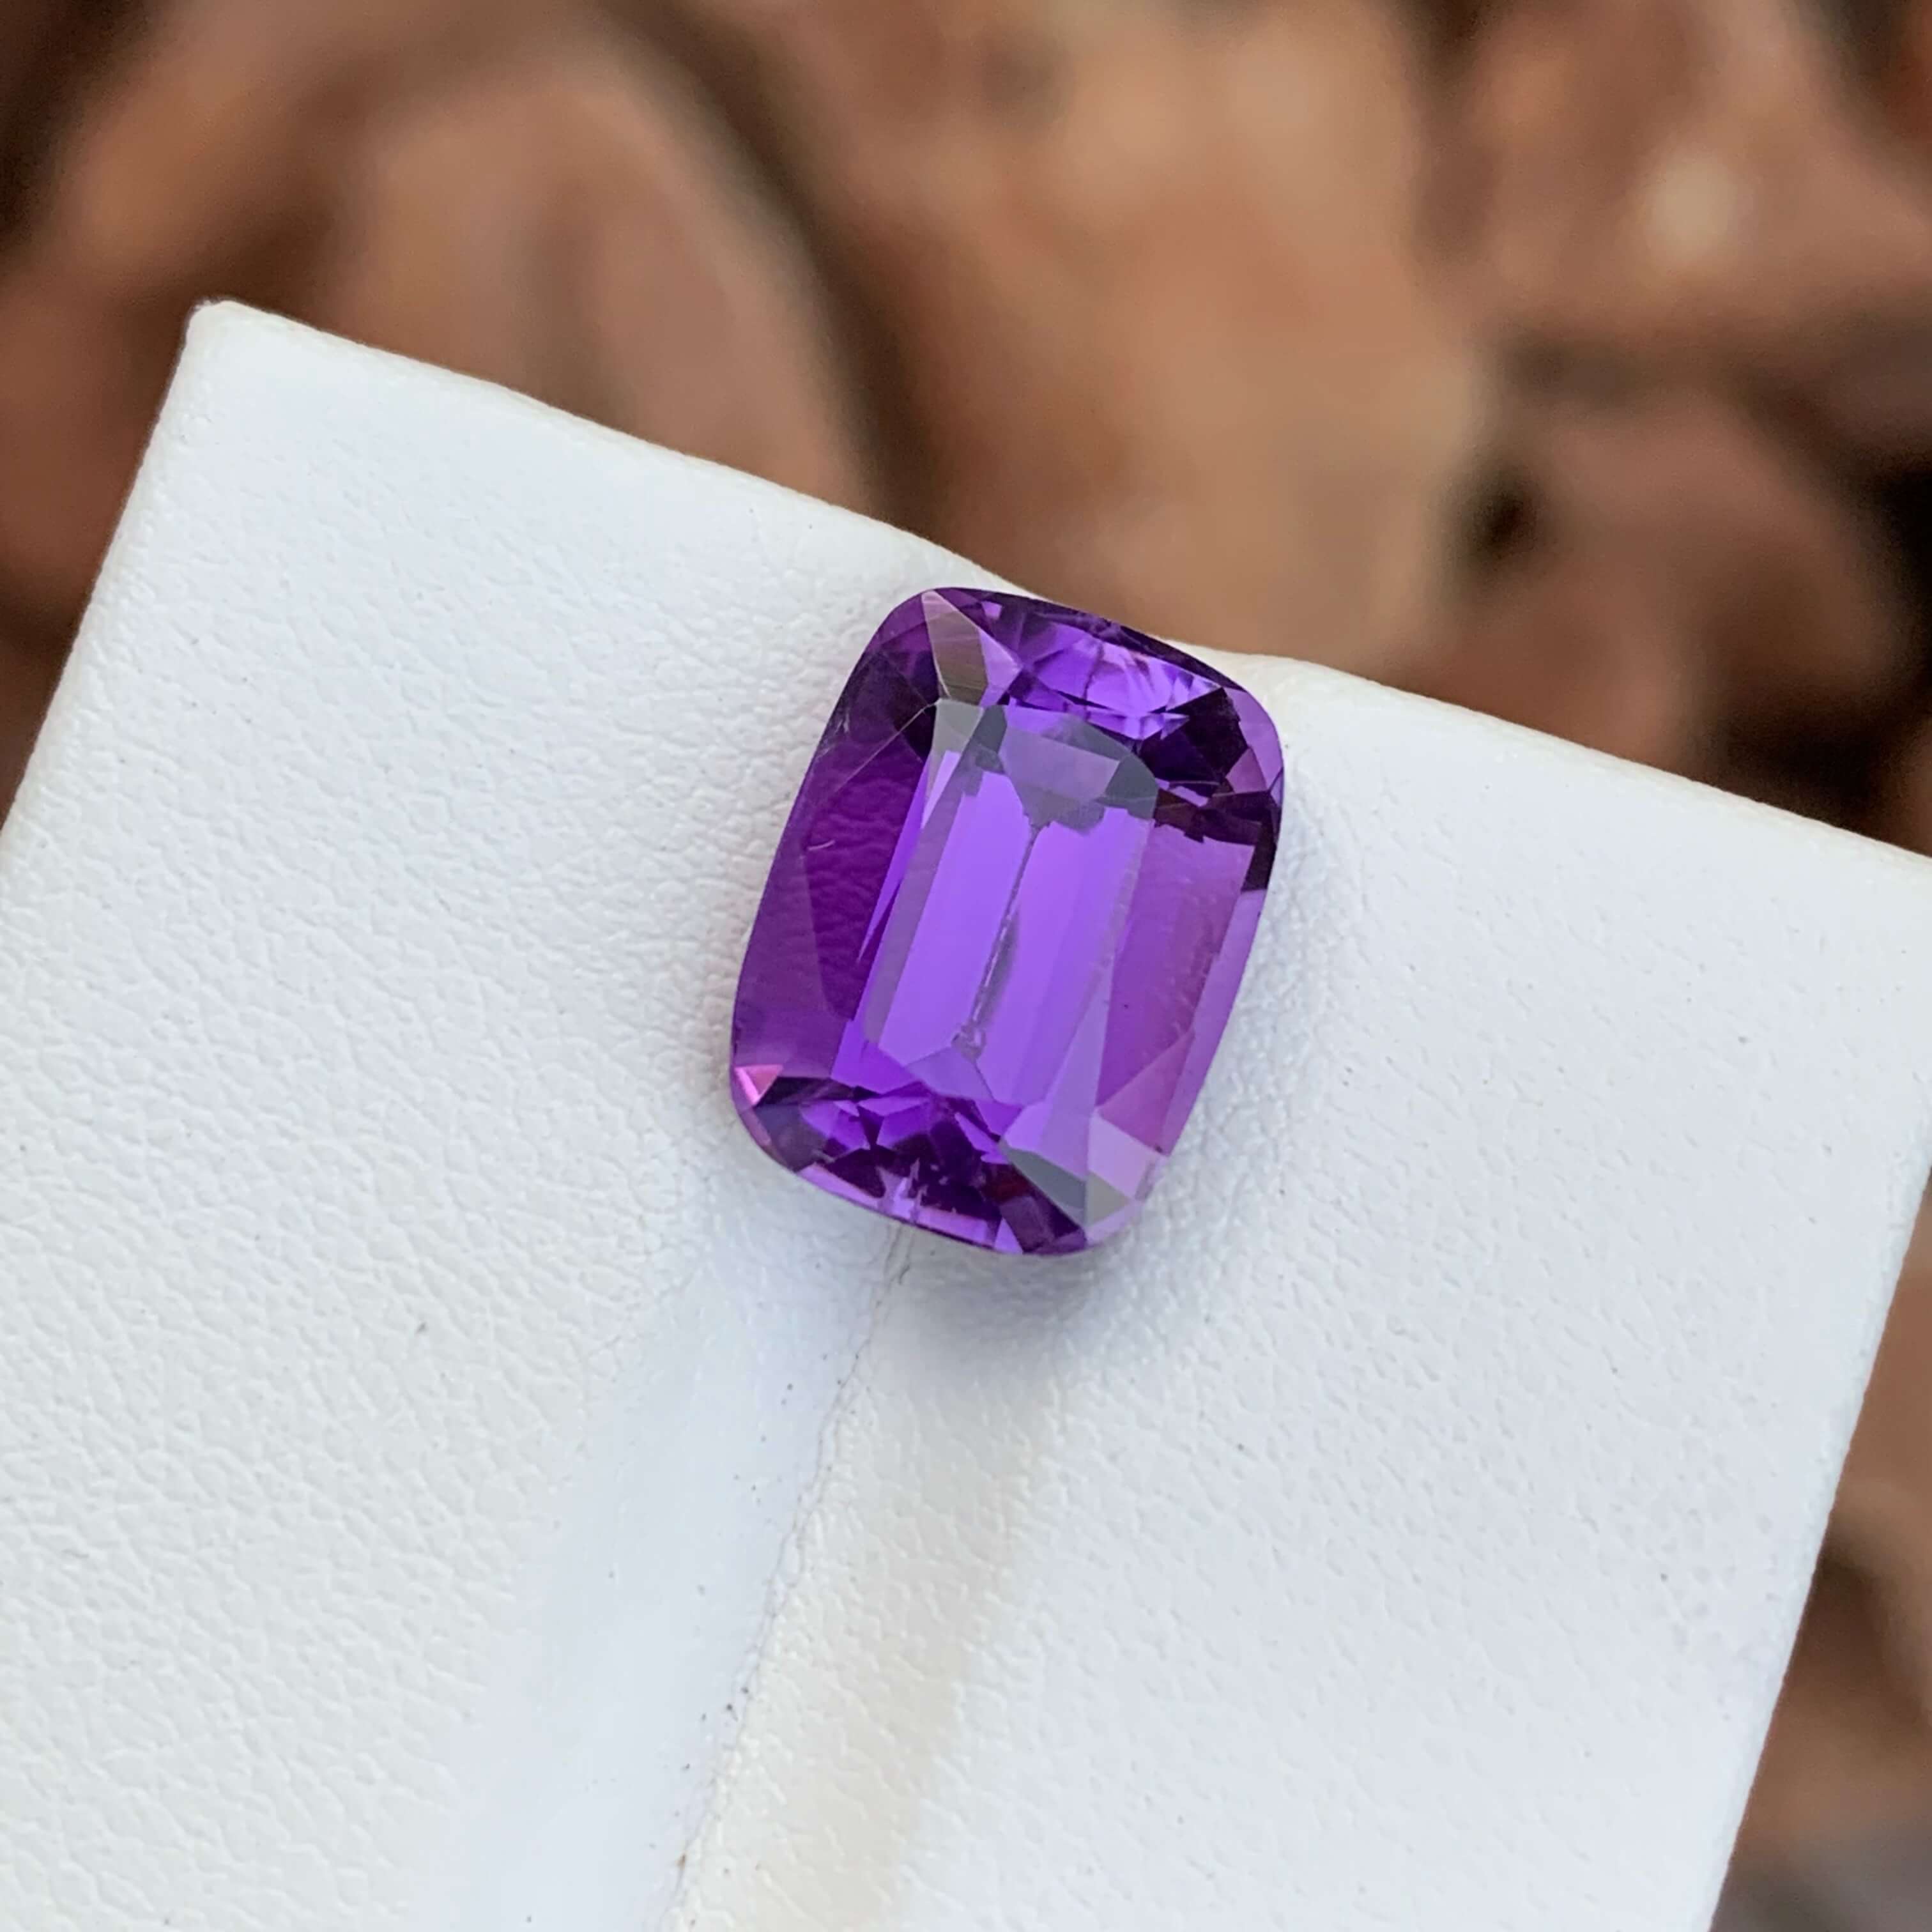 Gorgeous Natural Amethyst Cut Gemstone